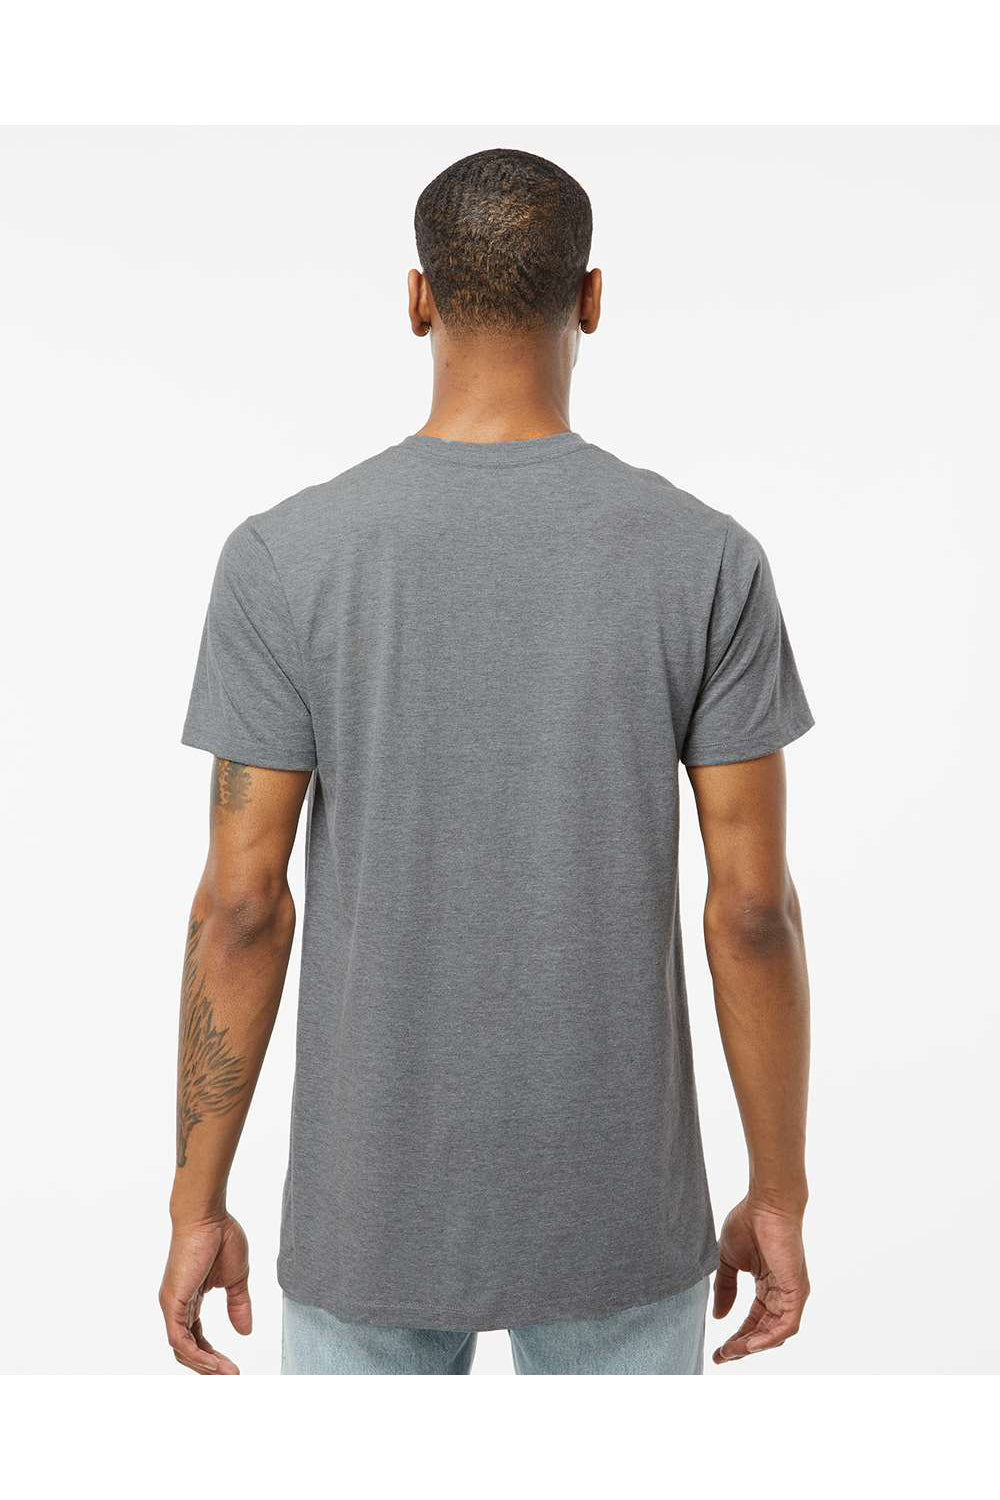 Tultex 541 Mens Premium Short Sleeve Crewneck T-Shirt Heather Grey Model Back